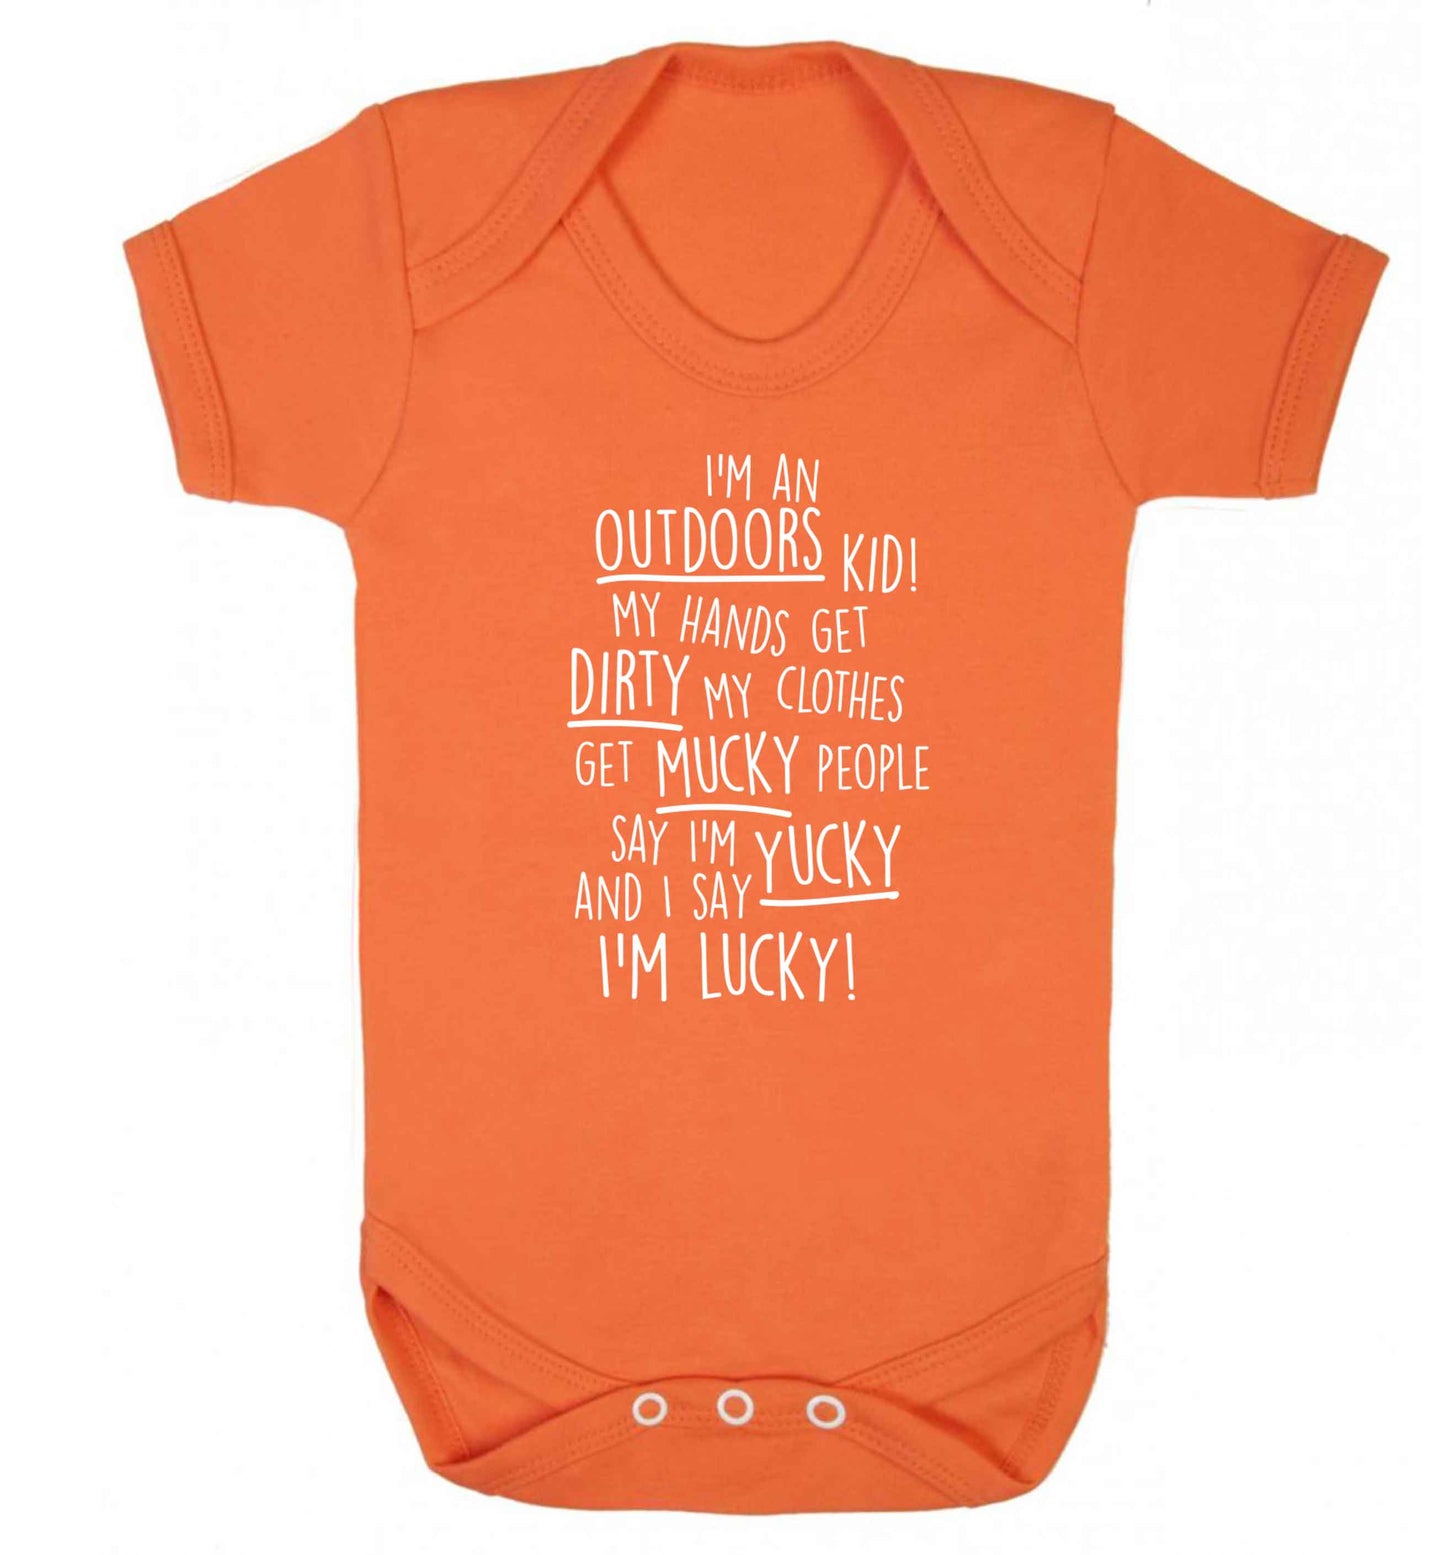 I'm an outdoors kid poem Baby Vest orange 18-24 months